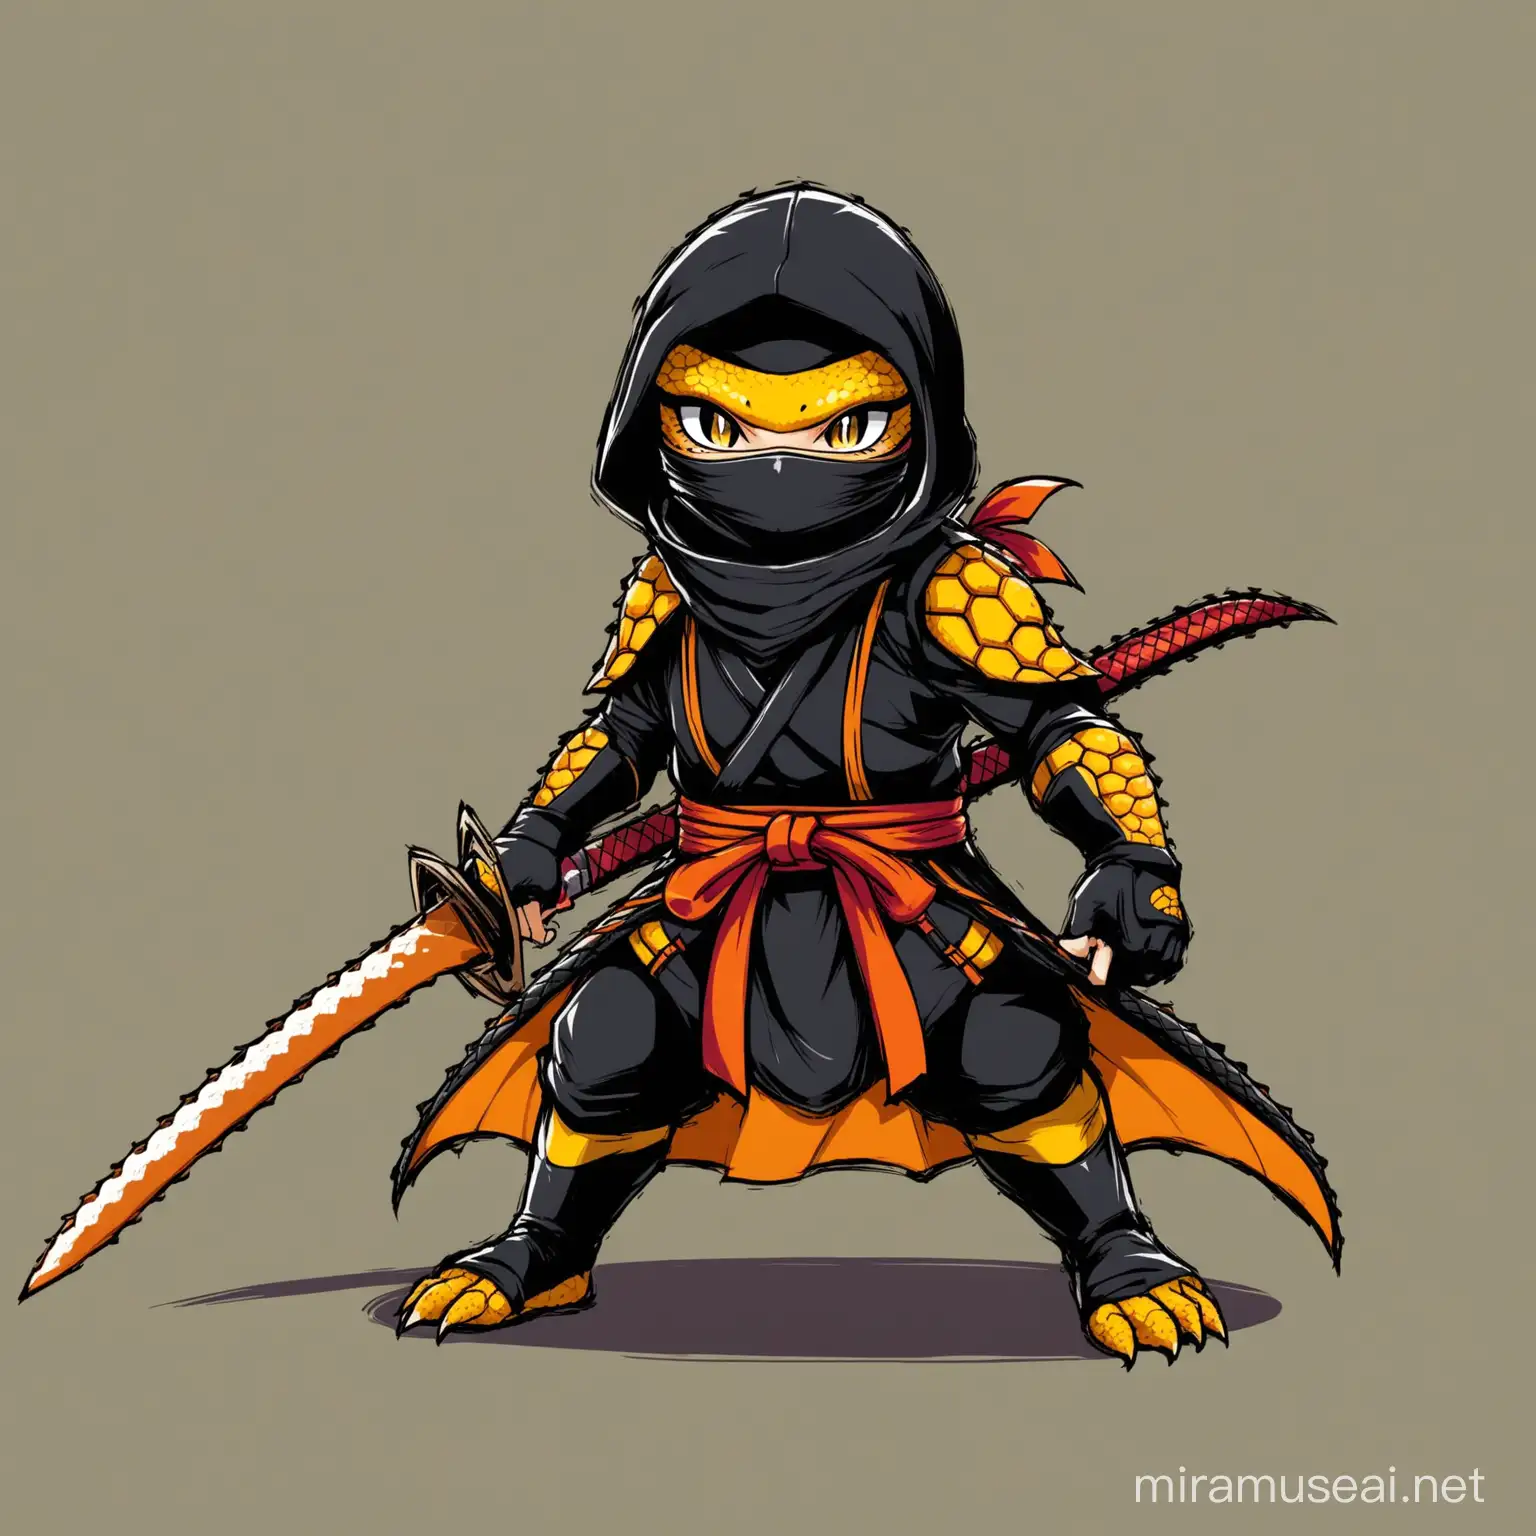 a salamandra ninja
